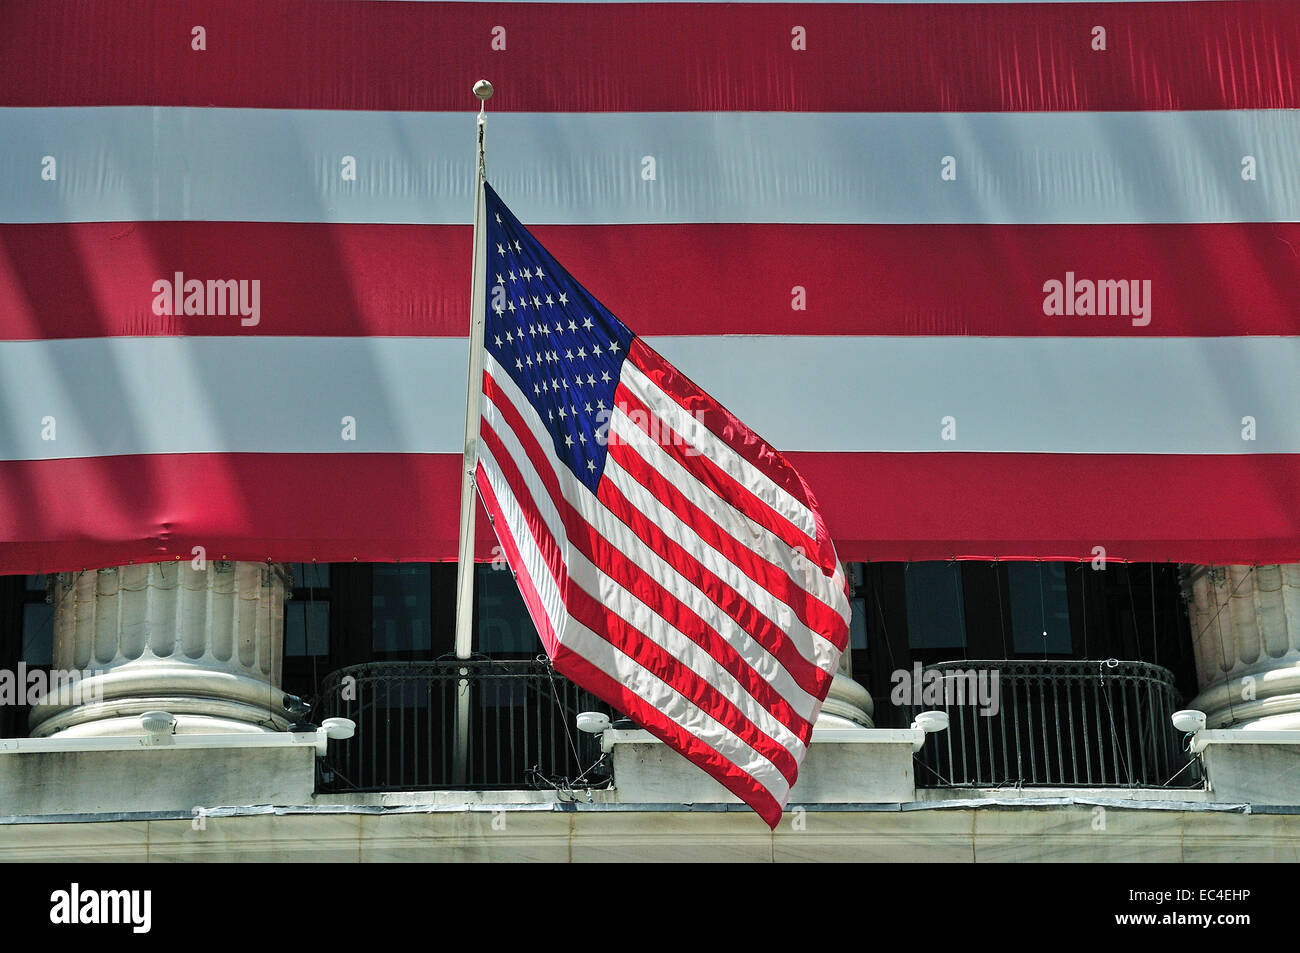 Fassade der New York Stock Exchange Börse mit USA-Nationalflagge an der Wall Street Financial Distict Manhattan New York City Stock Photo